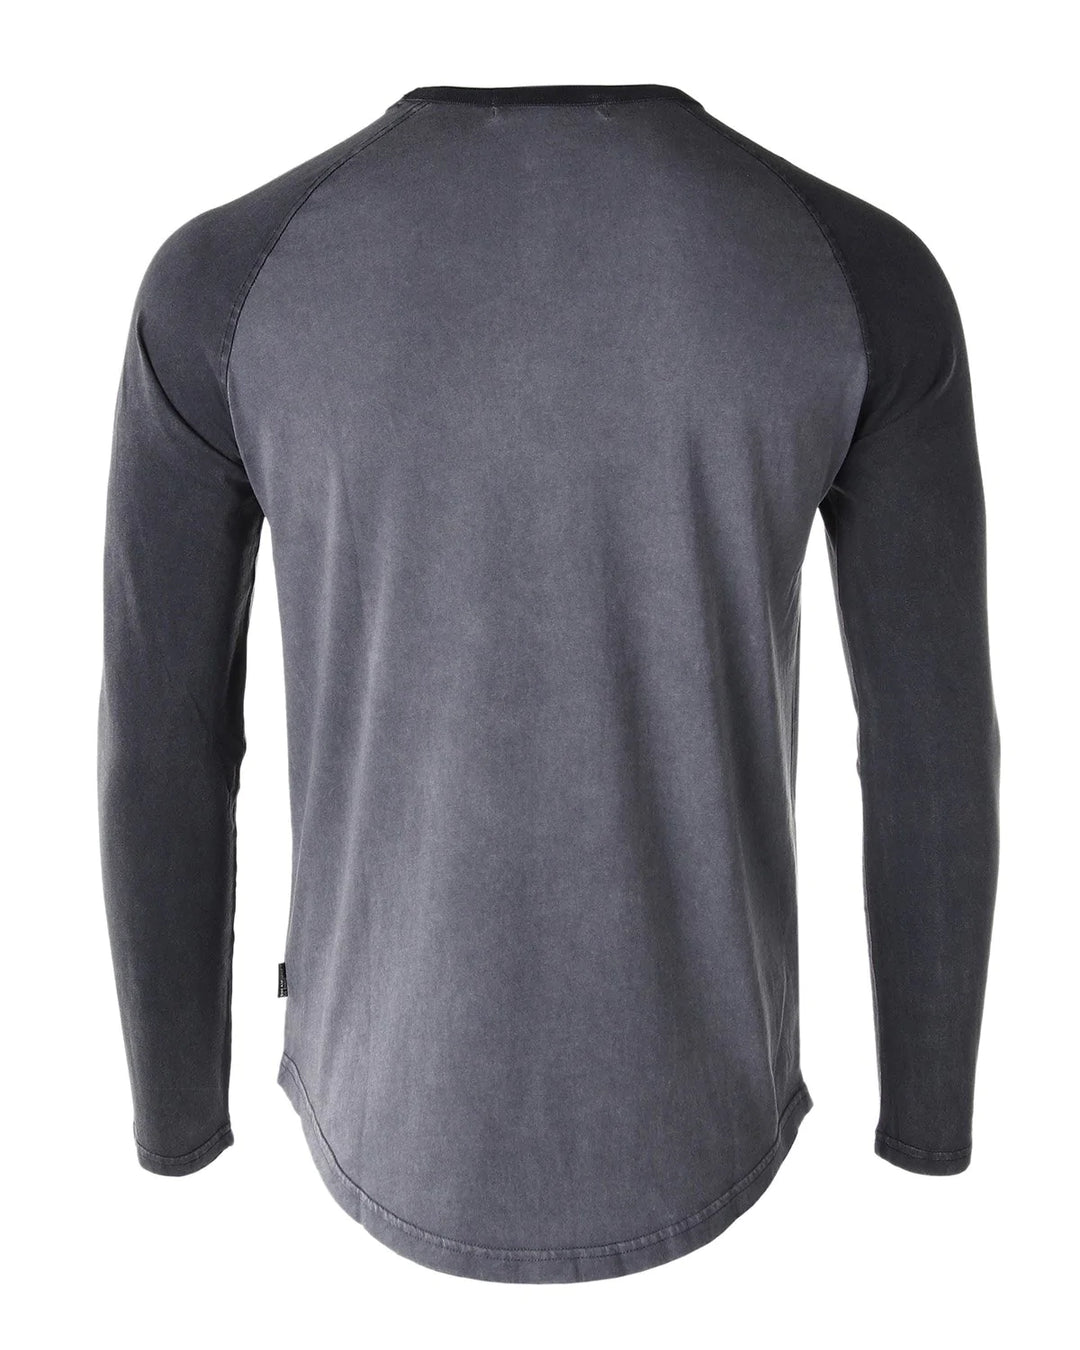 ZIMEGO Mens Athletic Fit Baseball Retro Contrast Long Sleeve Raglan T-Shirt